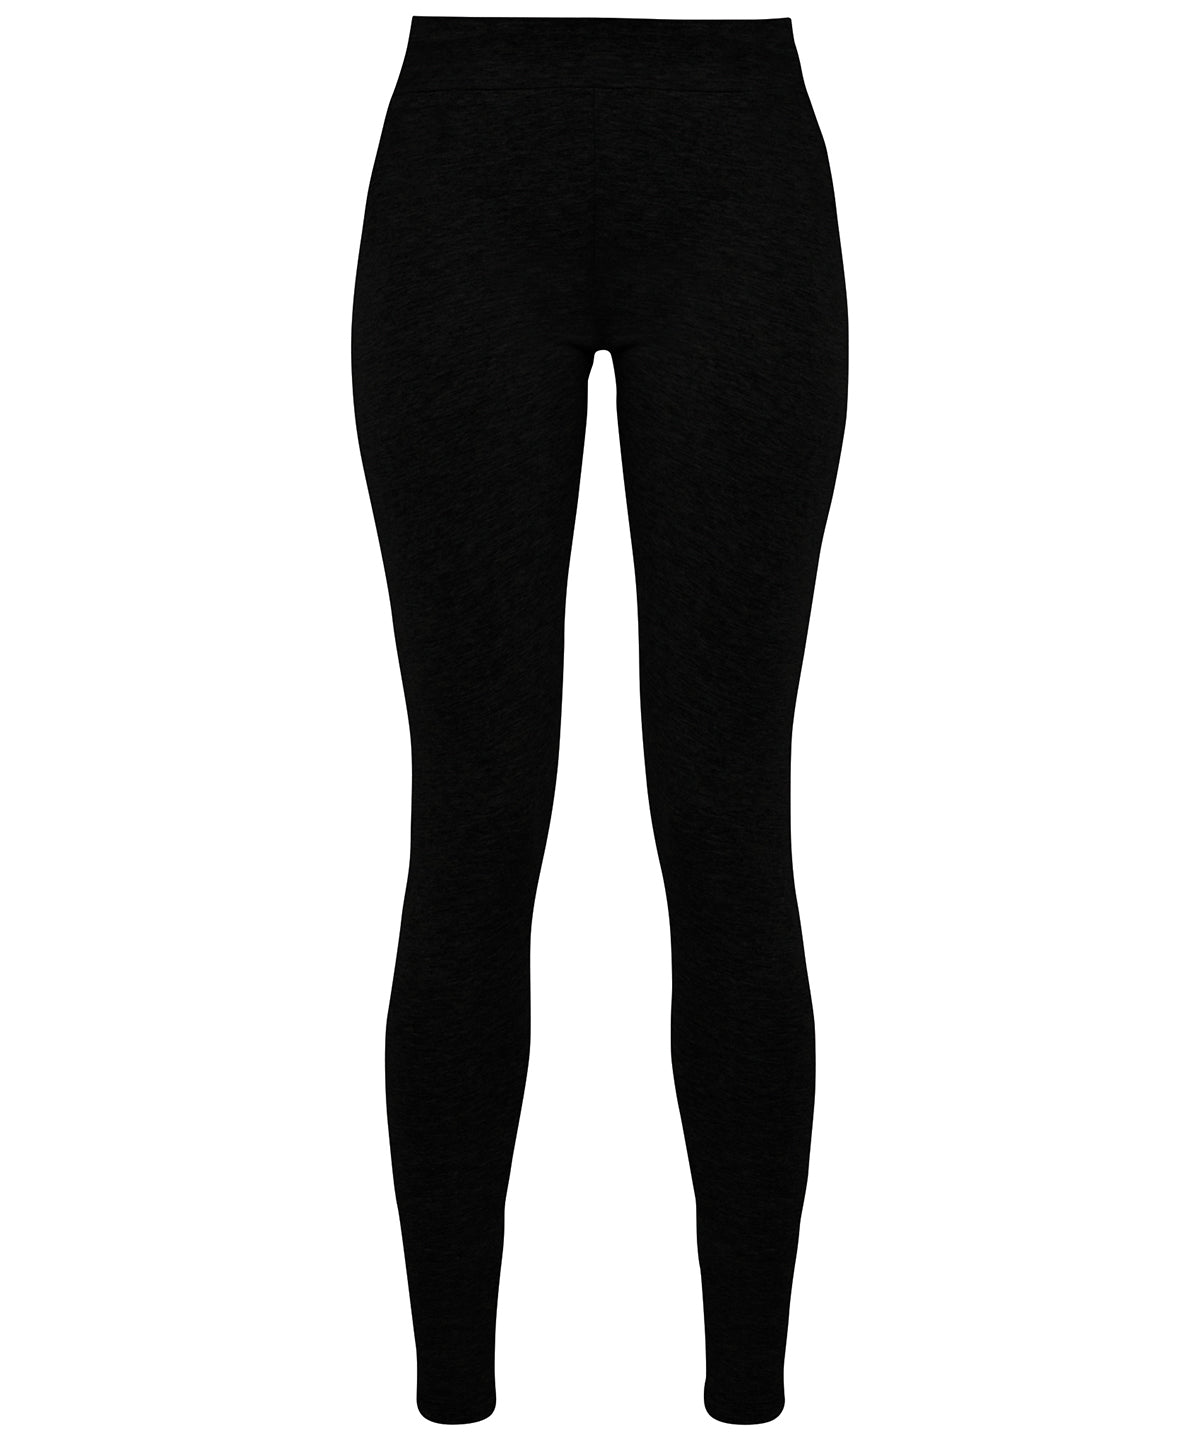 Personalised Leggings - Black Build Your Brand Women's stretch Jersey leggings